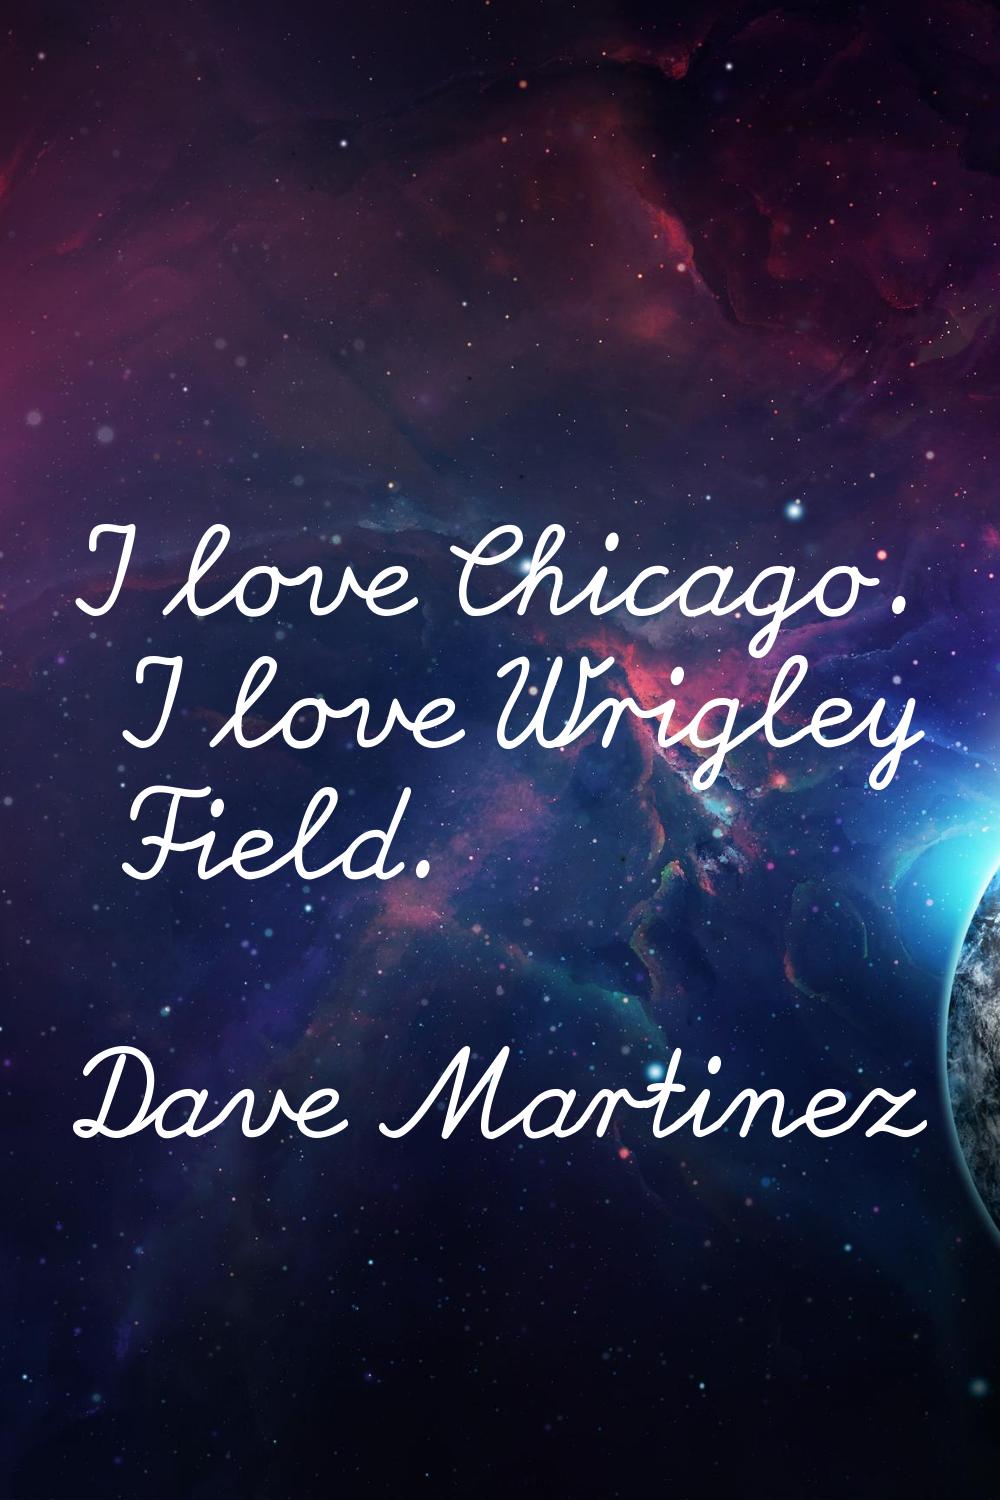 I love Chicago. I love Wrigley Field.